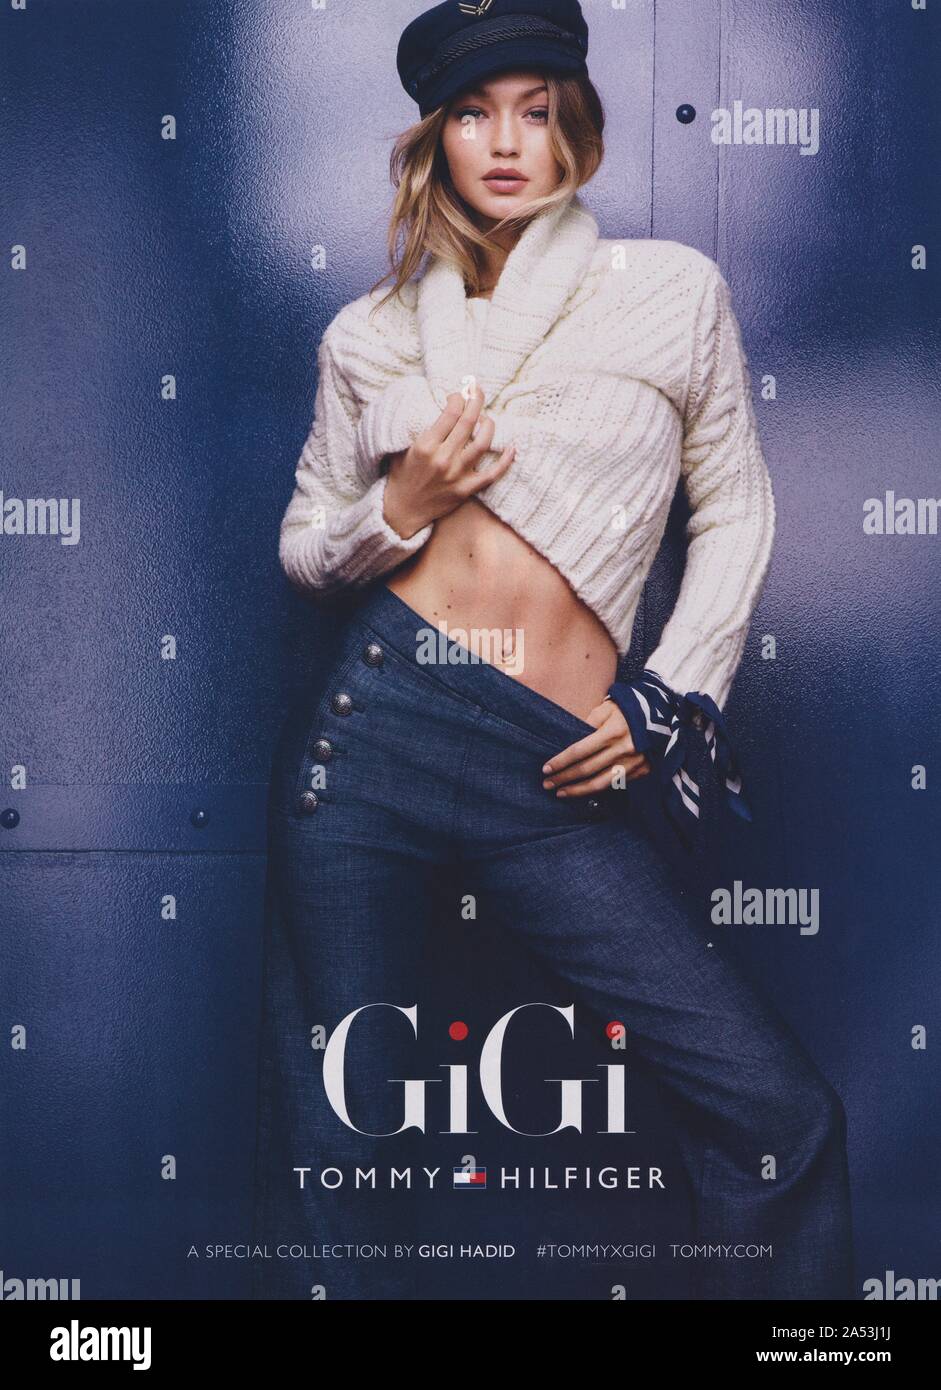 Gigi Hadid Advertisement | vlr.eng.br